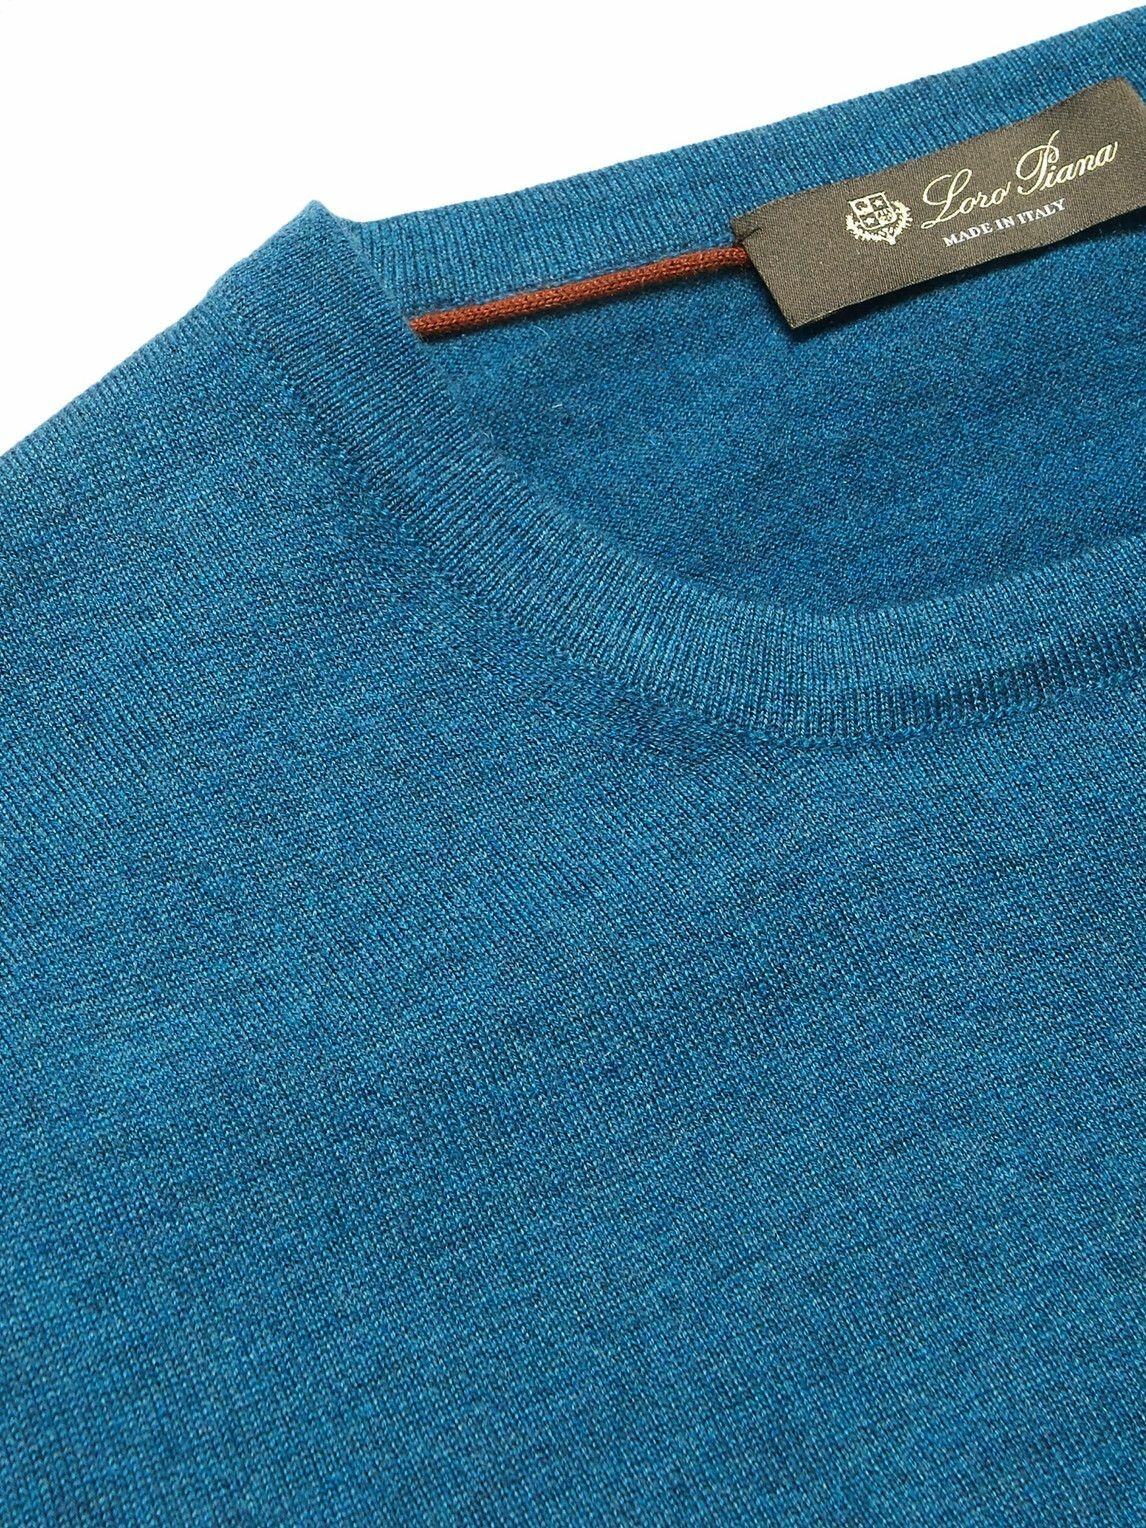 Loro Piana - Cashmere Sweater - Blue